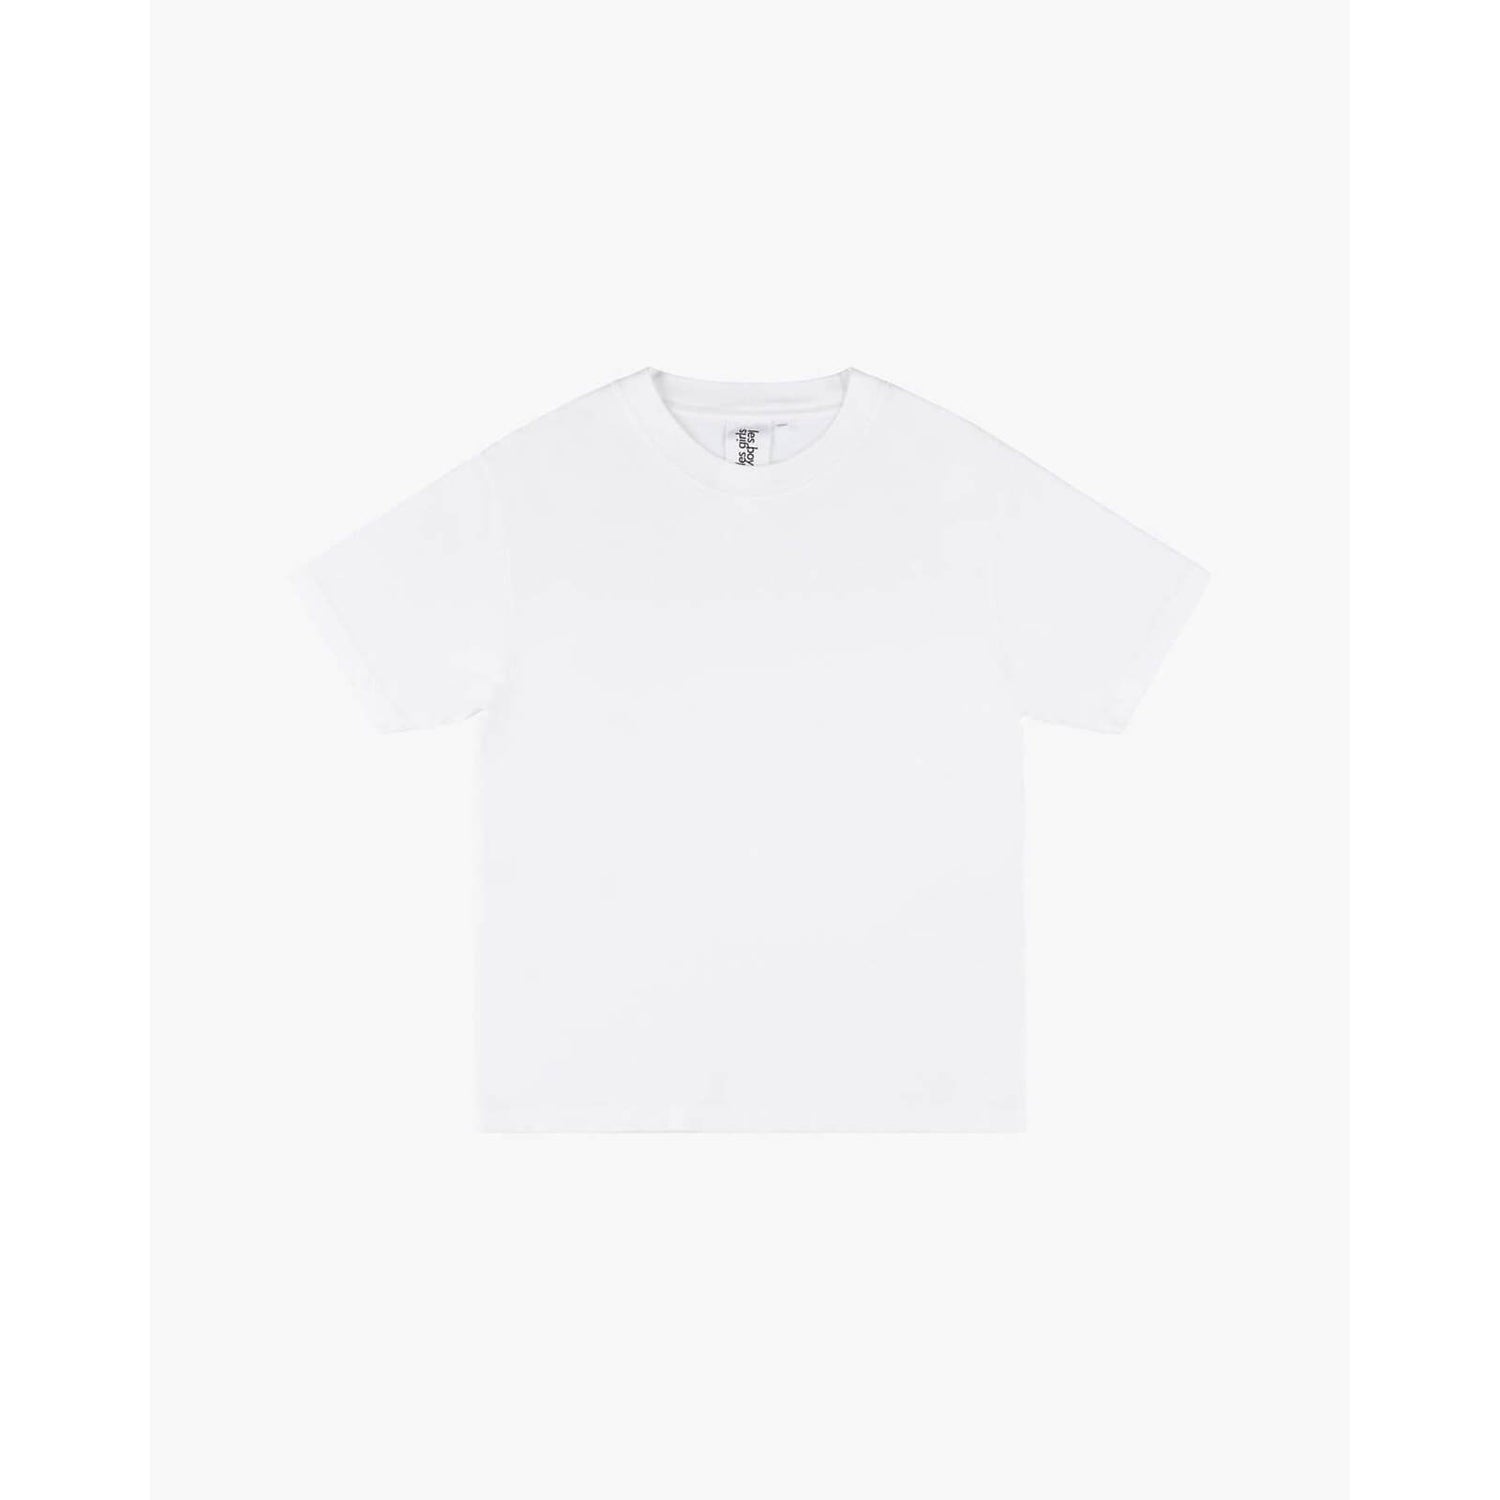 Les Girls Les Boys Women's Single Jersey T-Shirt - White